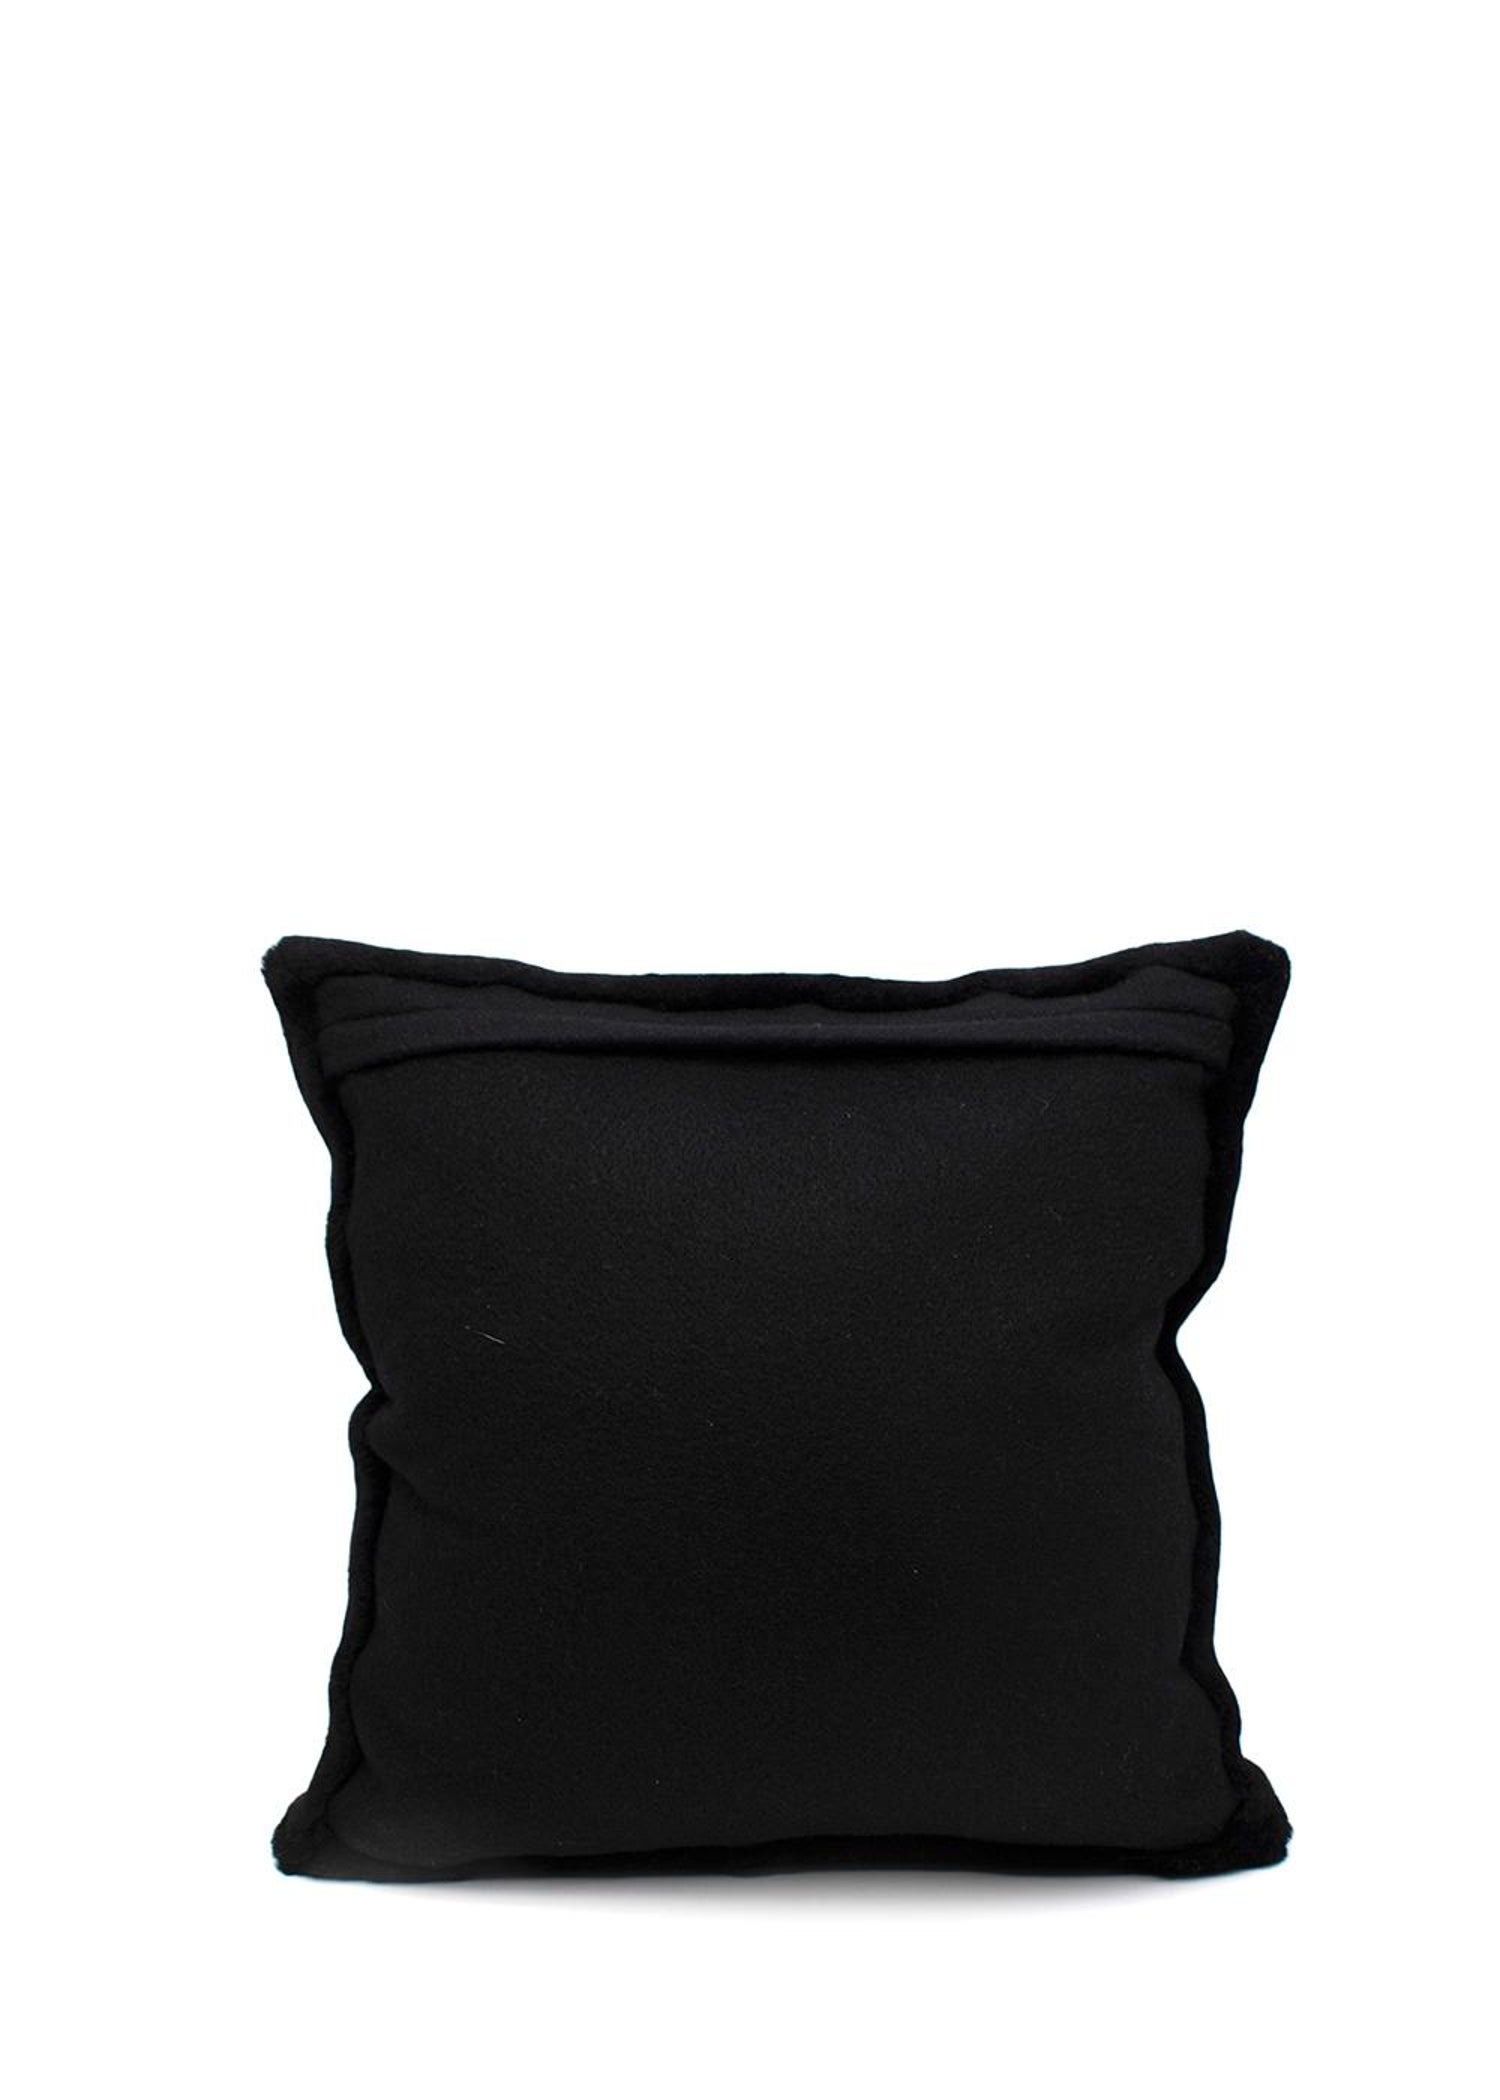 Grey & Black CC Shearling & Cashmere Pillow